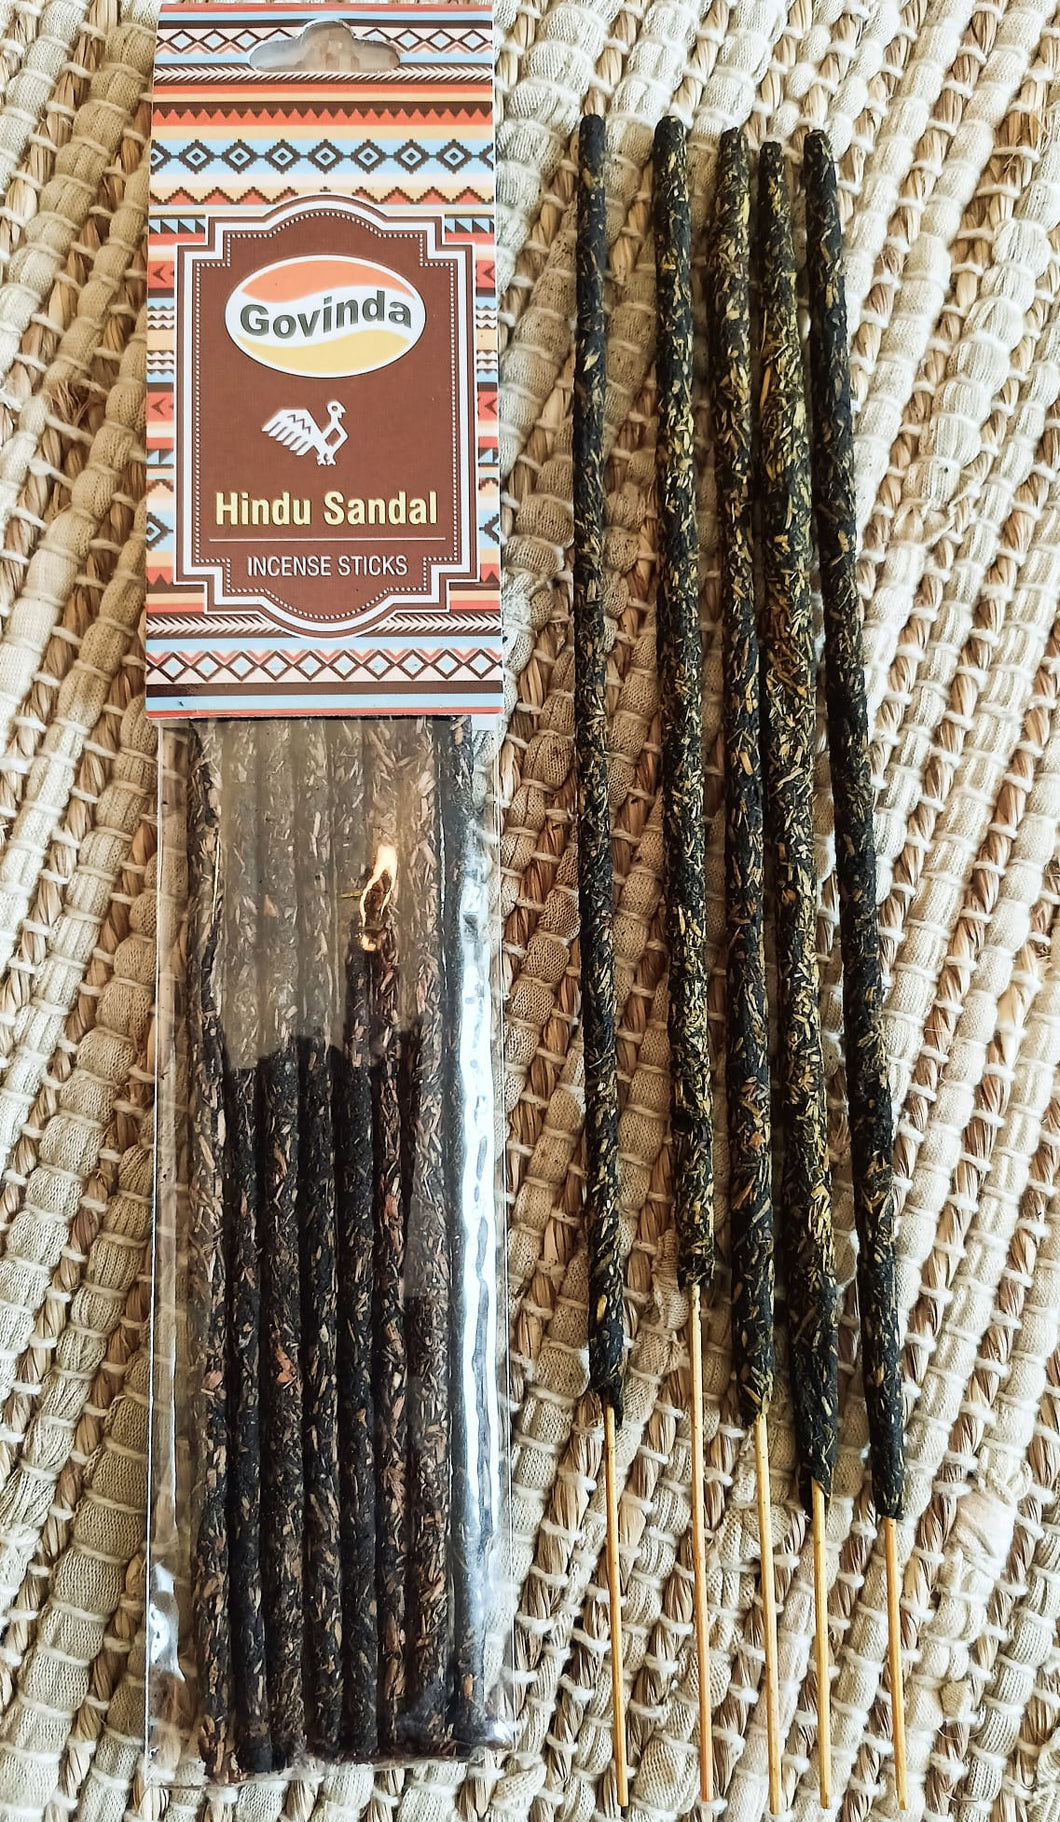 Govinda imported incense sticks